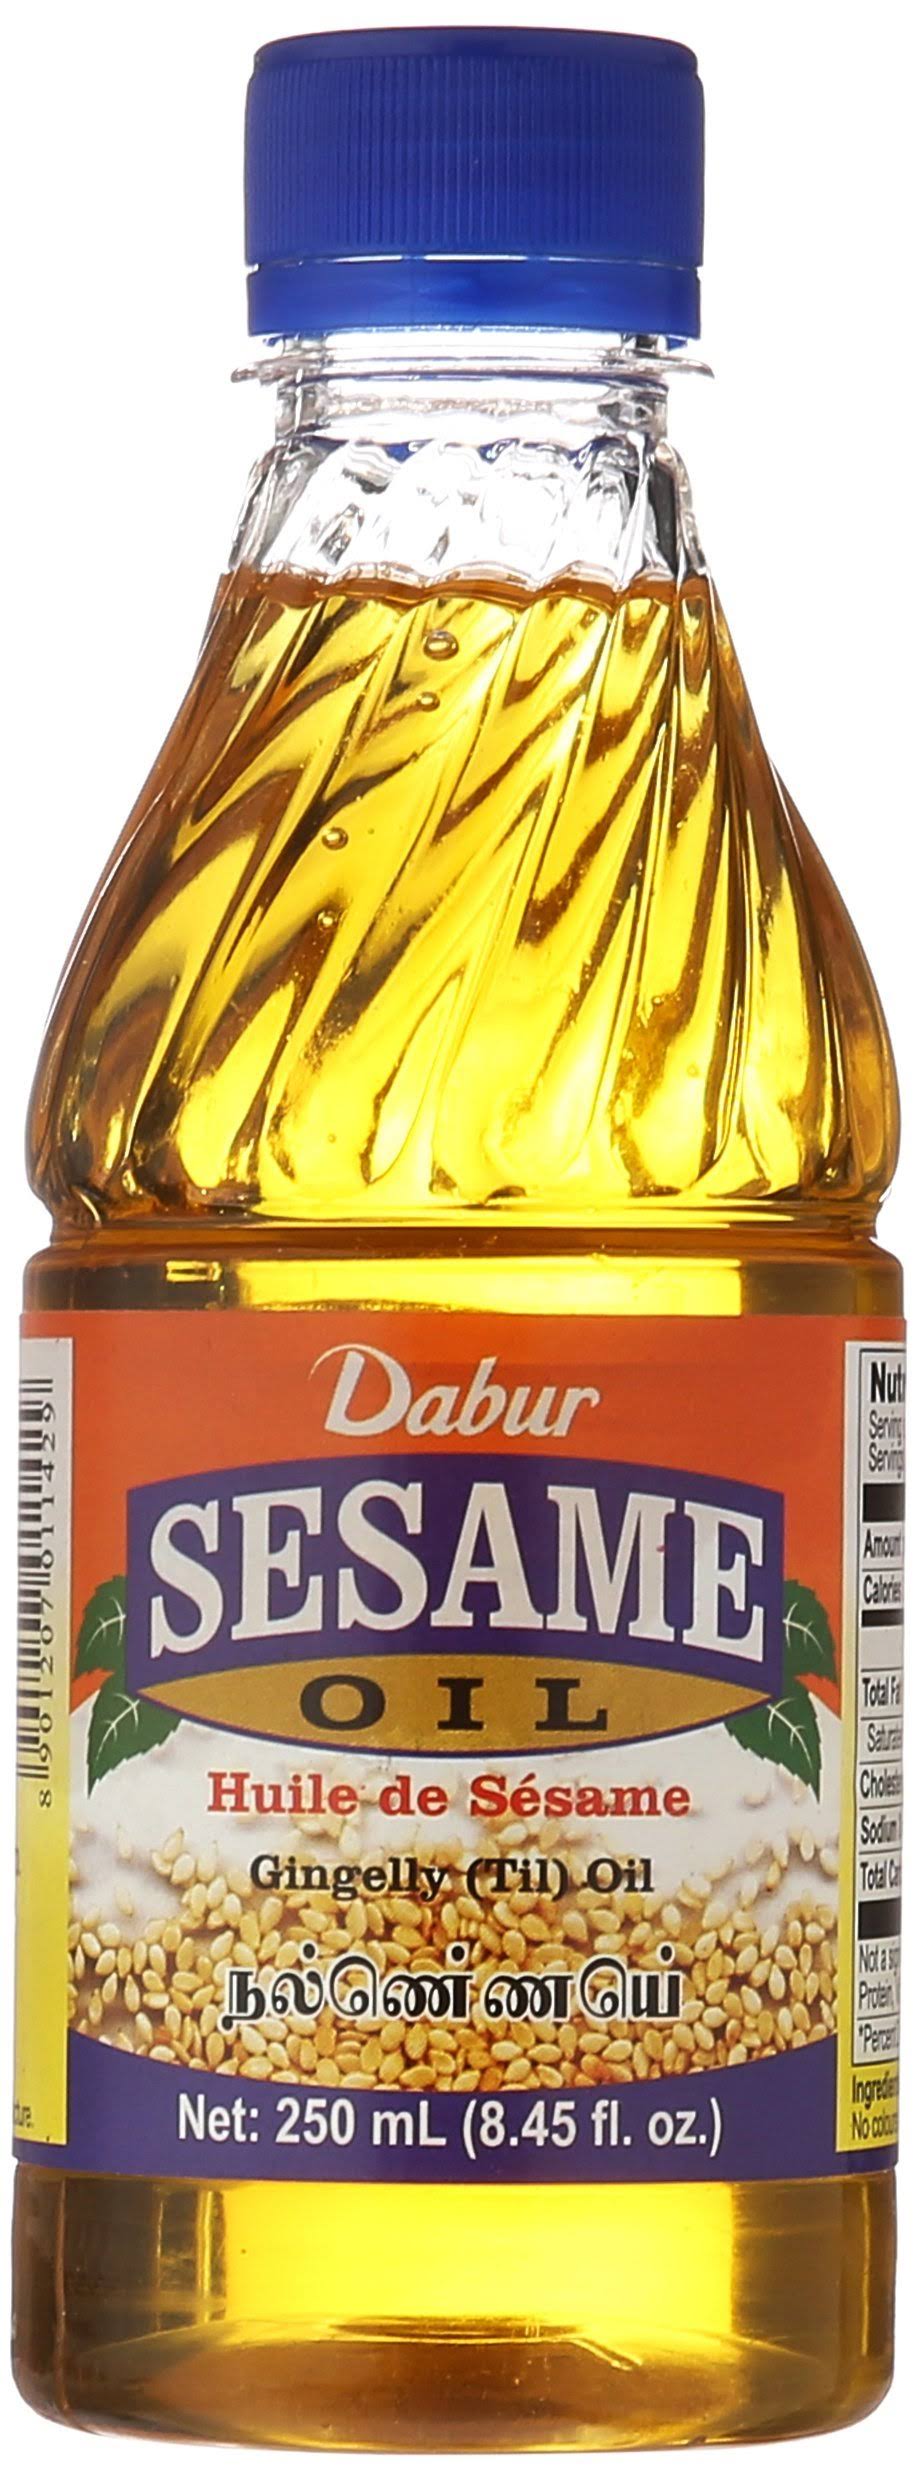 Dabur Sesame Oil - 250ml